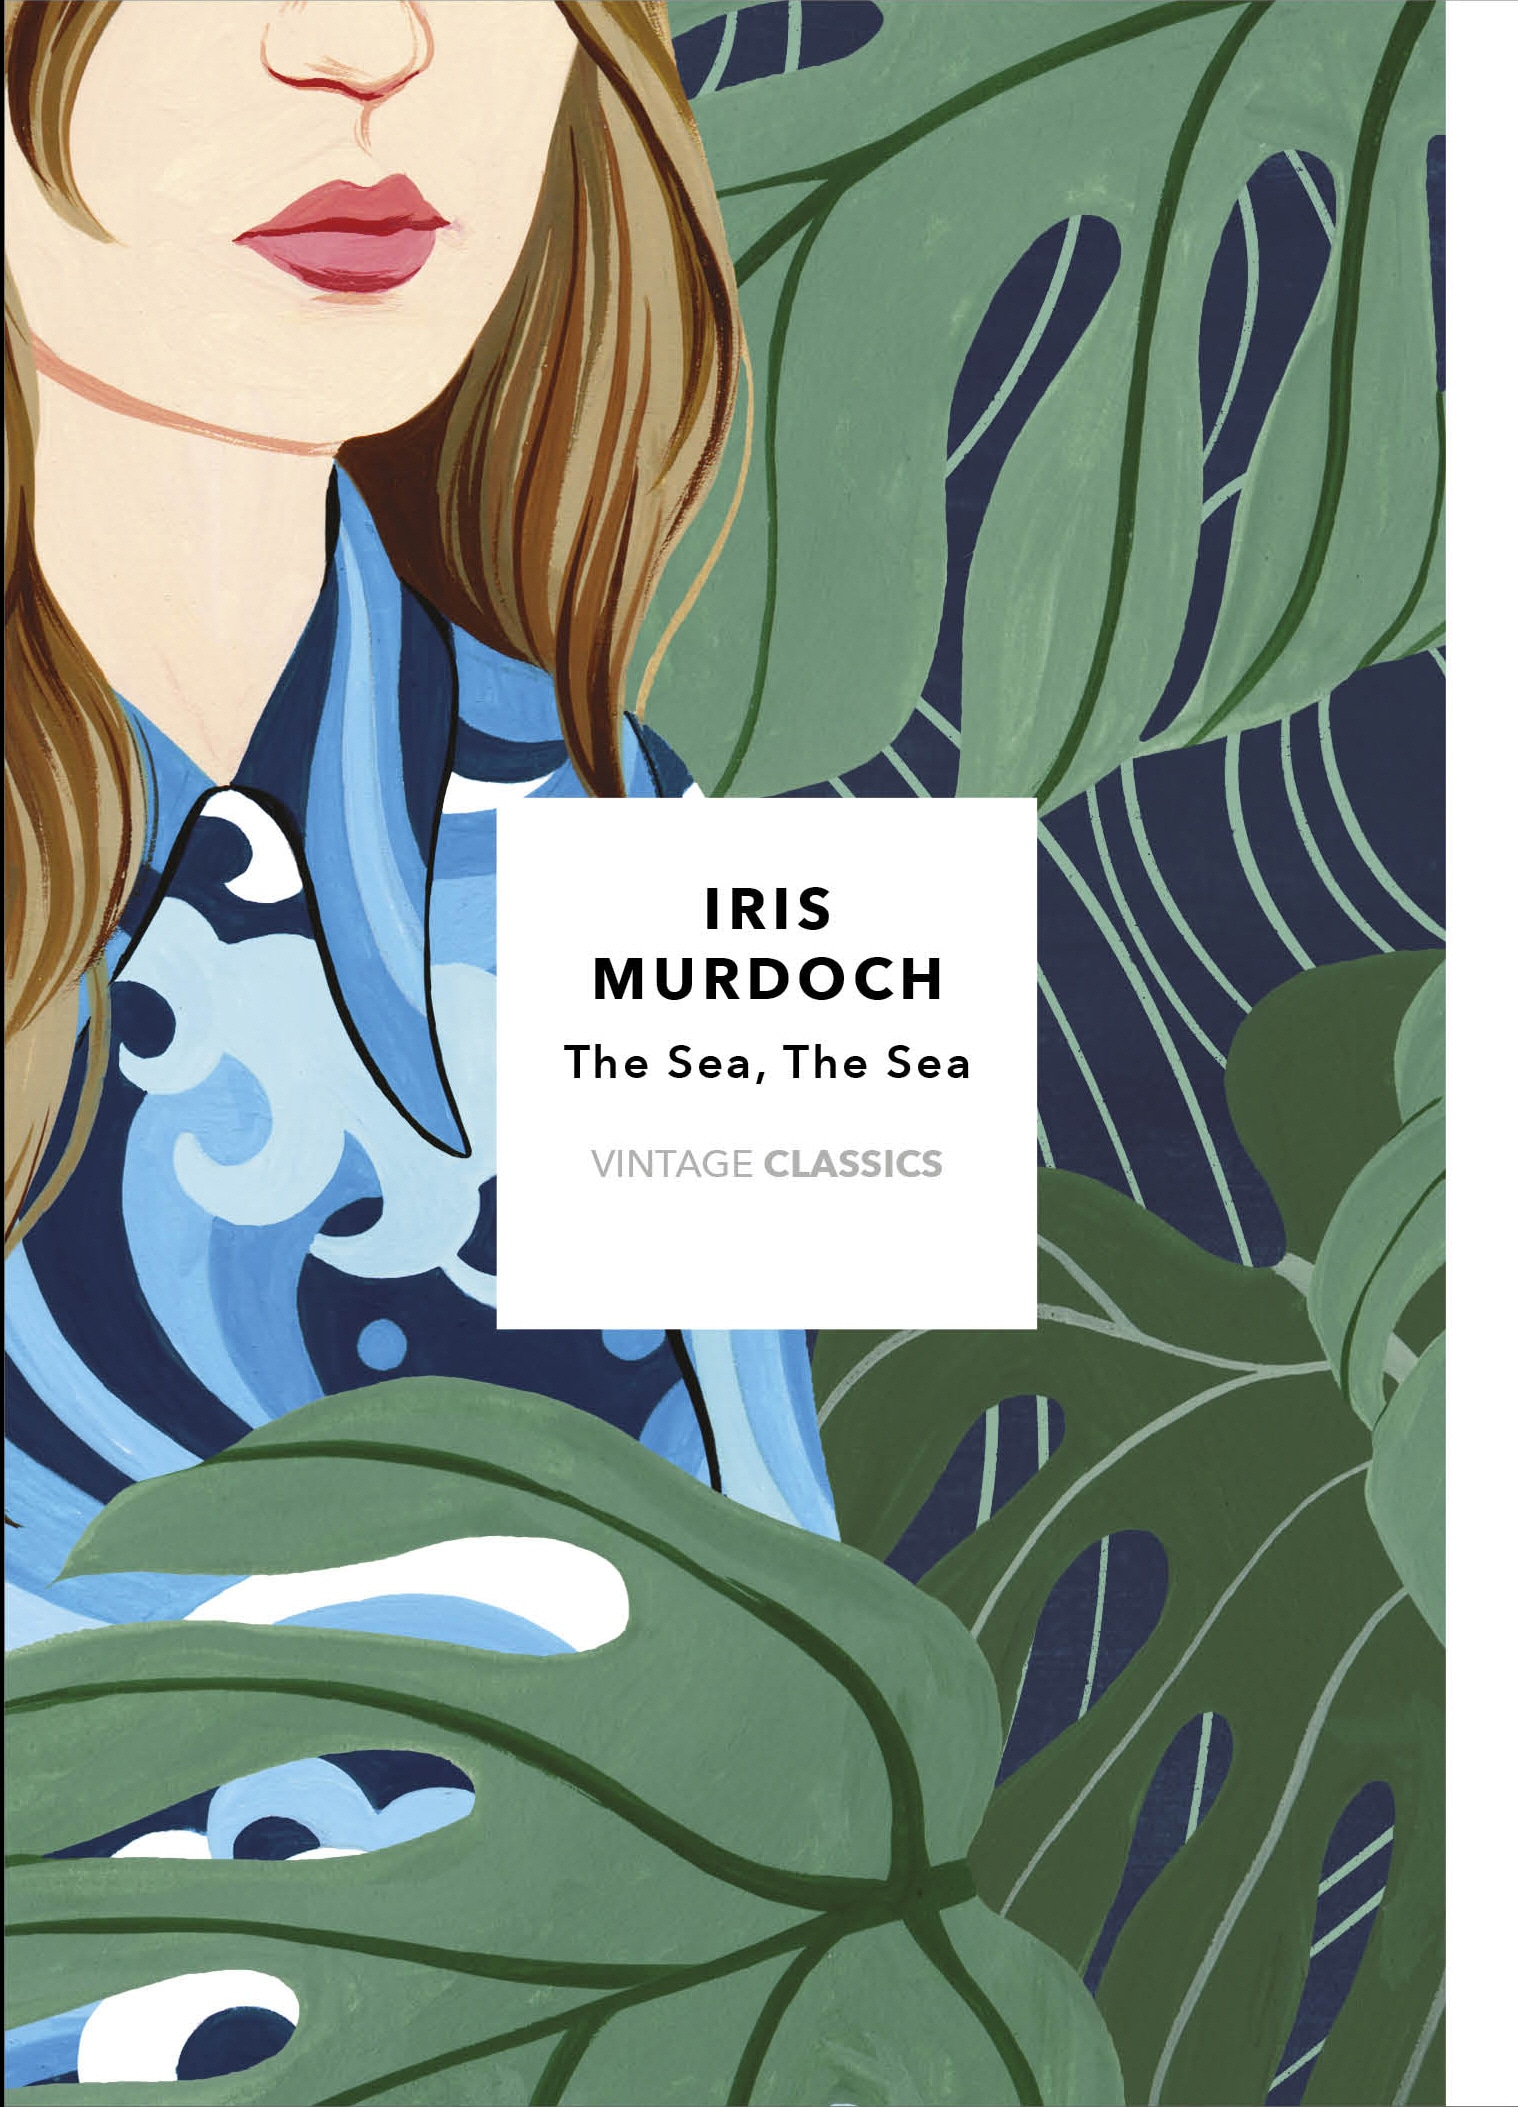 Book “The Sea, The Sea (Vintage Classics Murdoch Series)” by Iris Murdoch, Daisy Johnson — July 4, 2019